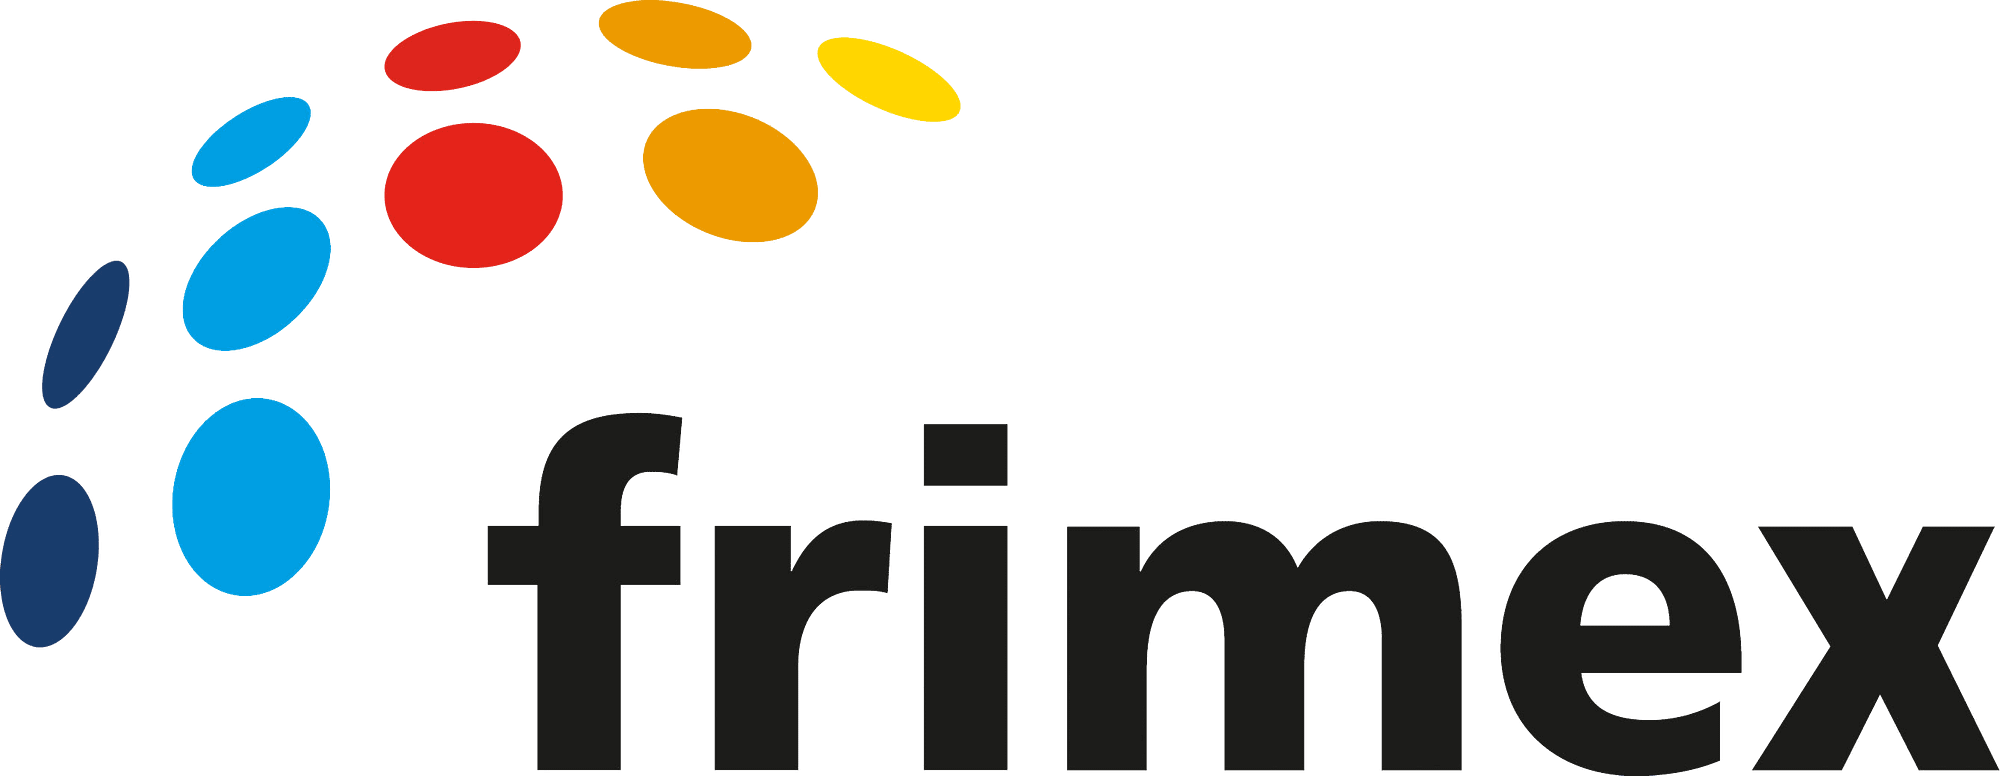 Frimex logo